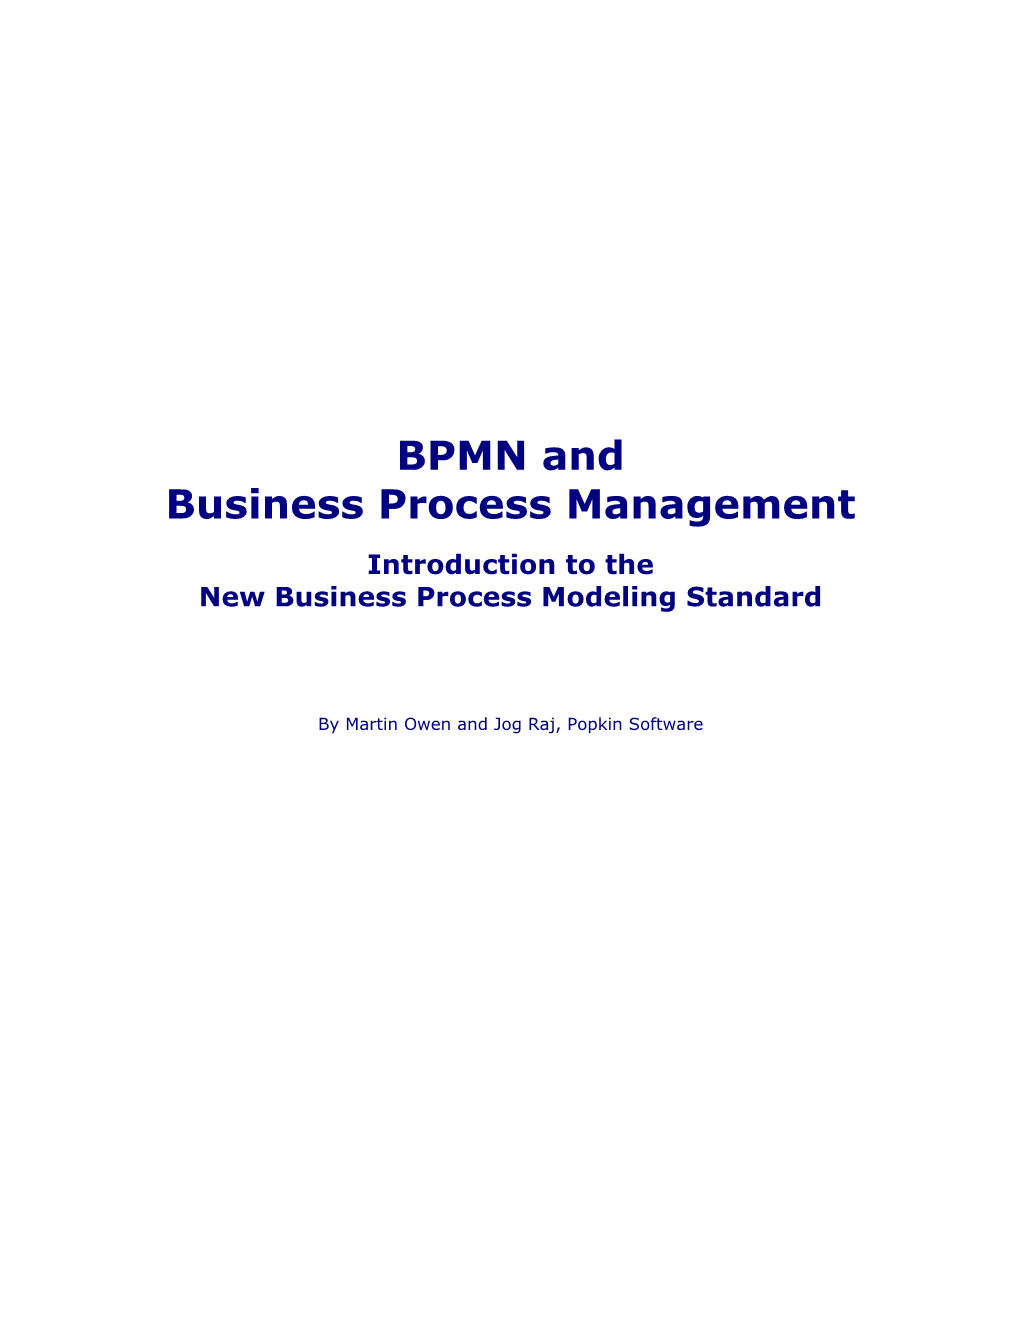 BPMN and Business Process Management